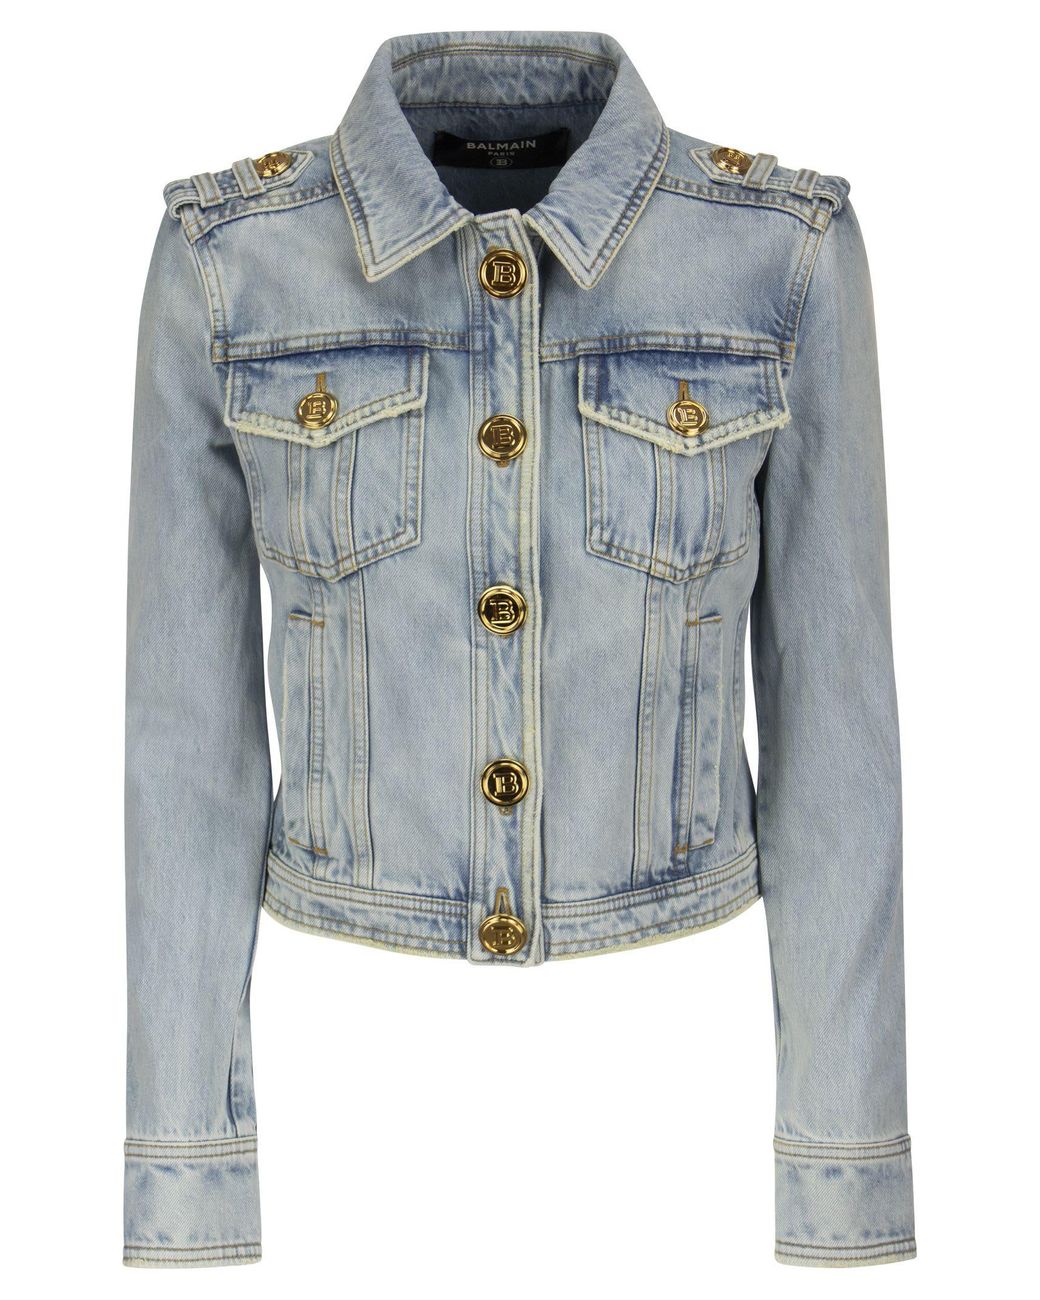 Balmain Denim Jacket With Gold Buttons in Light Blue (Blue) - Lyst